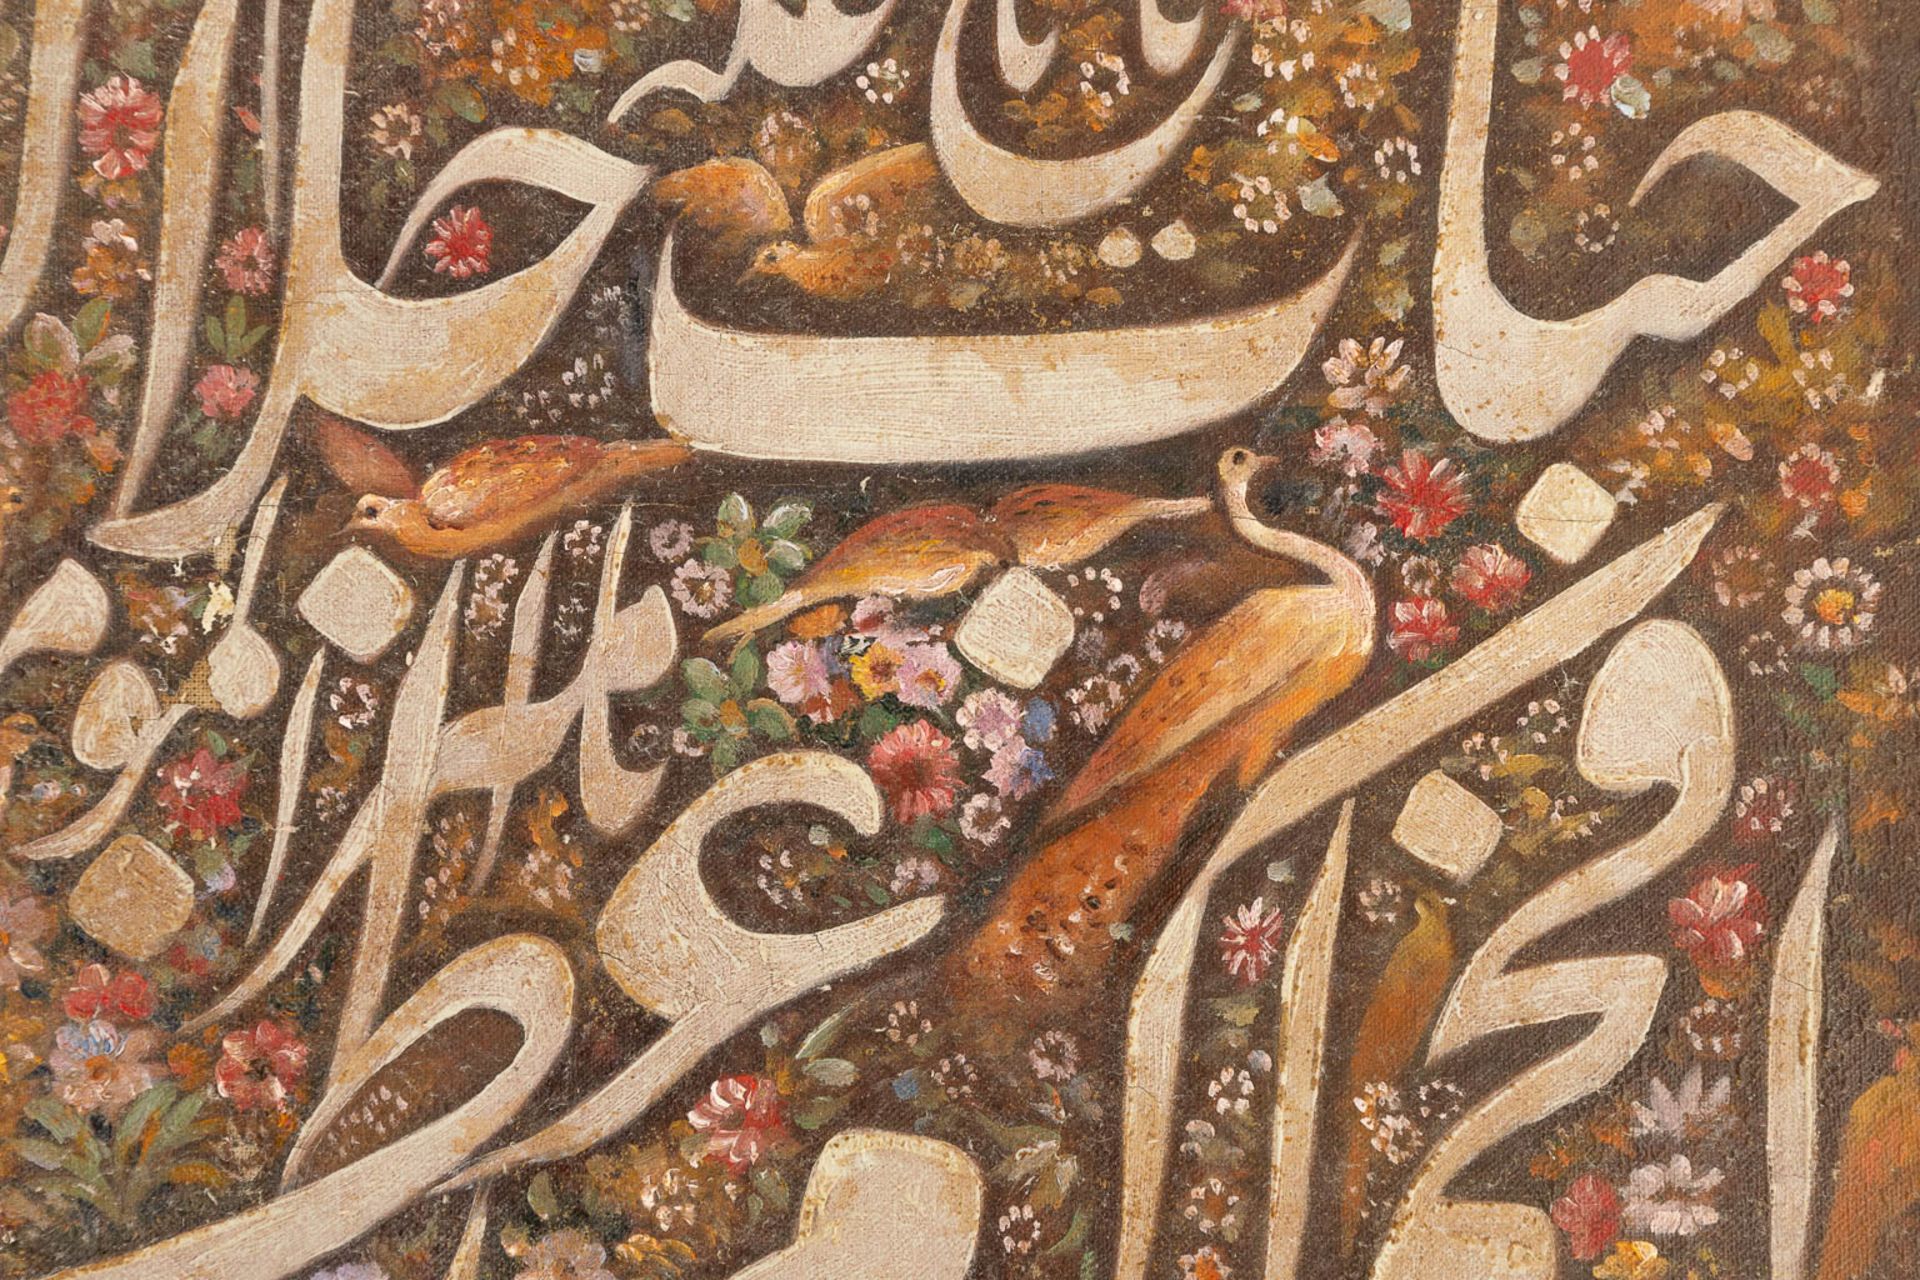 Naqash Bashi, Jalairi, A Persian calligraphic oil painting. Qajar era. (W:60 x H:34 cm) - Image 6 of 7